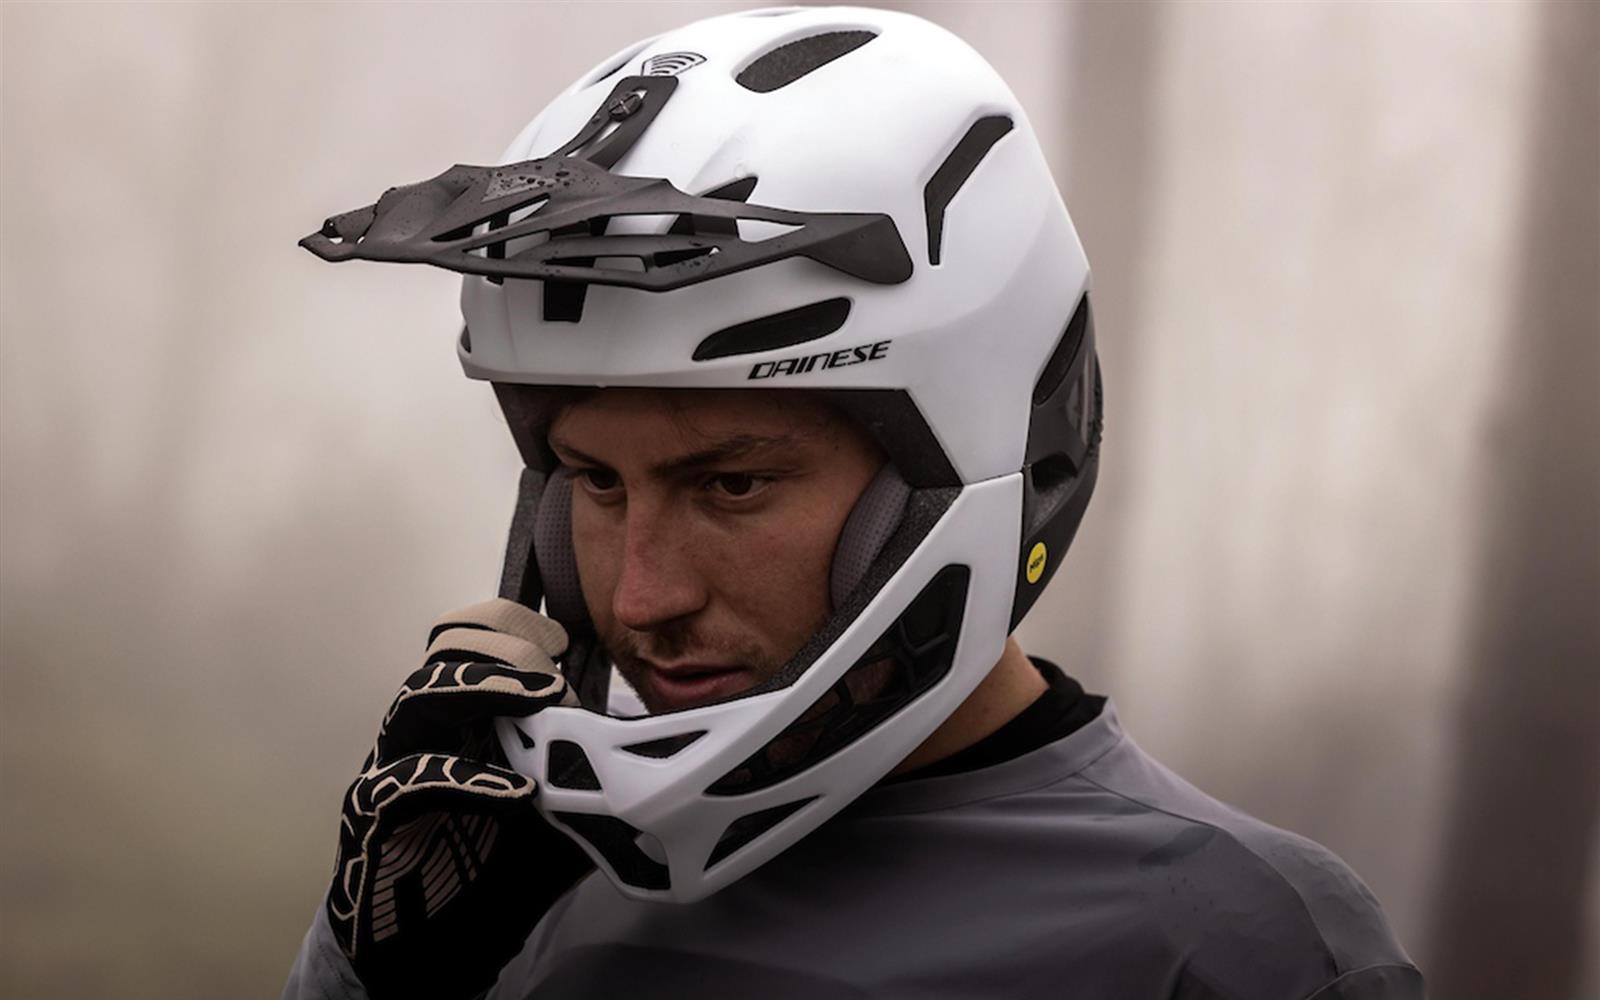 Dainese helmets for MTB: Linea 01 and Linea 03